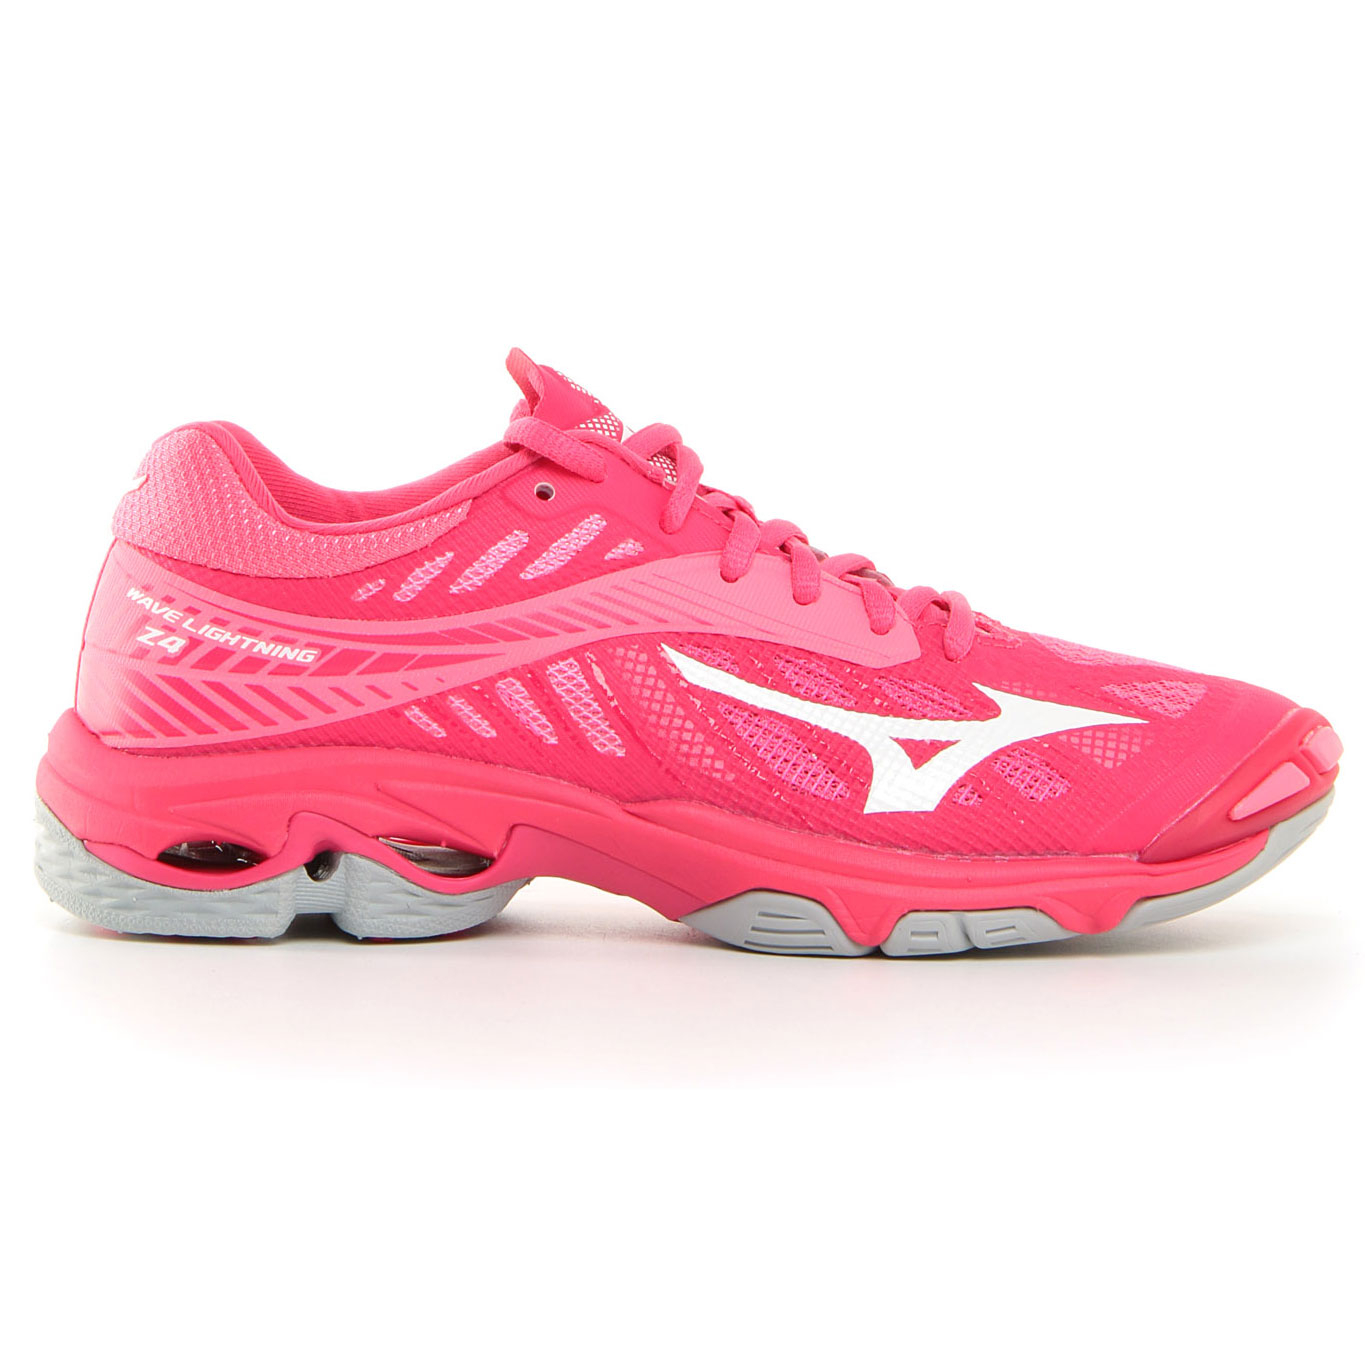 Chaussures Volley-Ball Femme Wave Lightning Z4 - Azalea/White/Camellia Rose